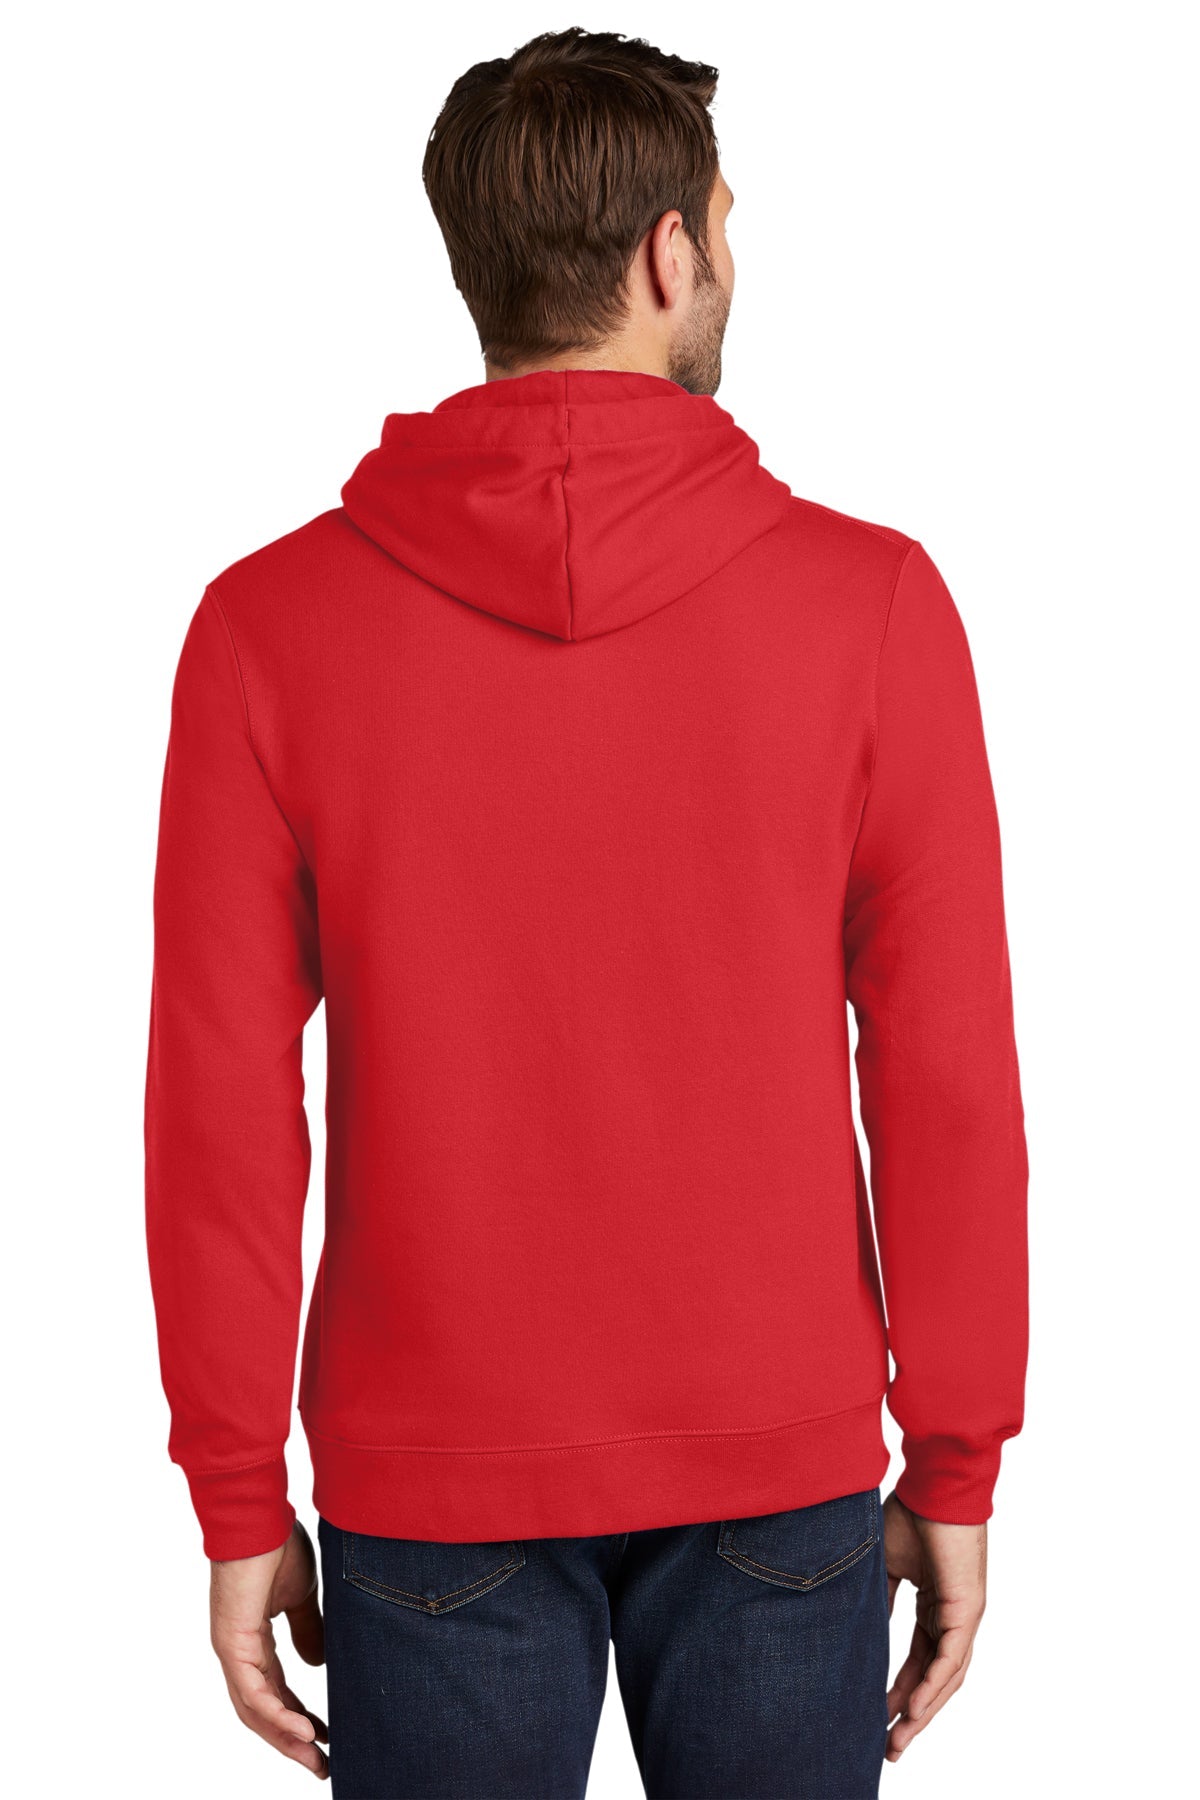 port & company_pc850h _bright red_company_logo_sweatshirts